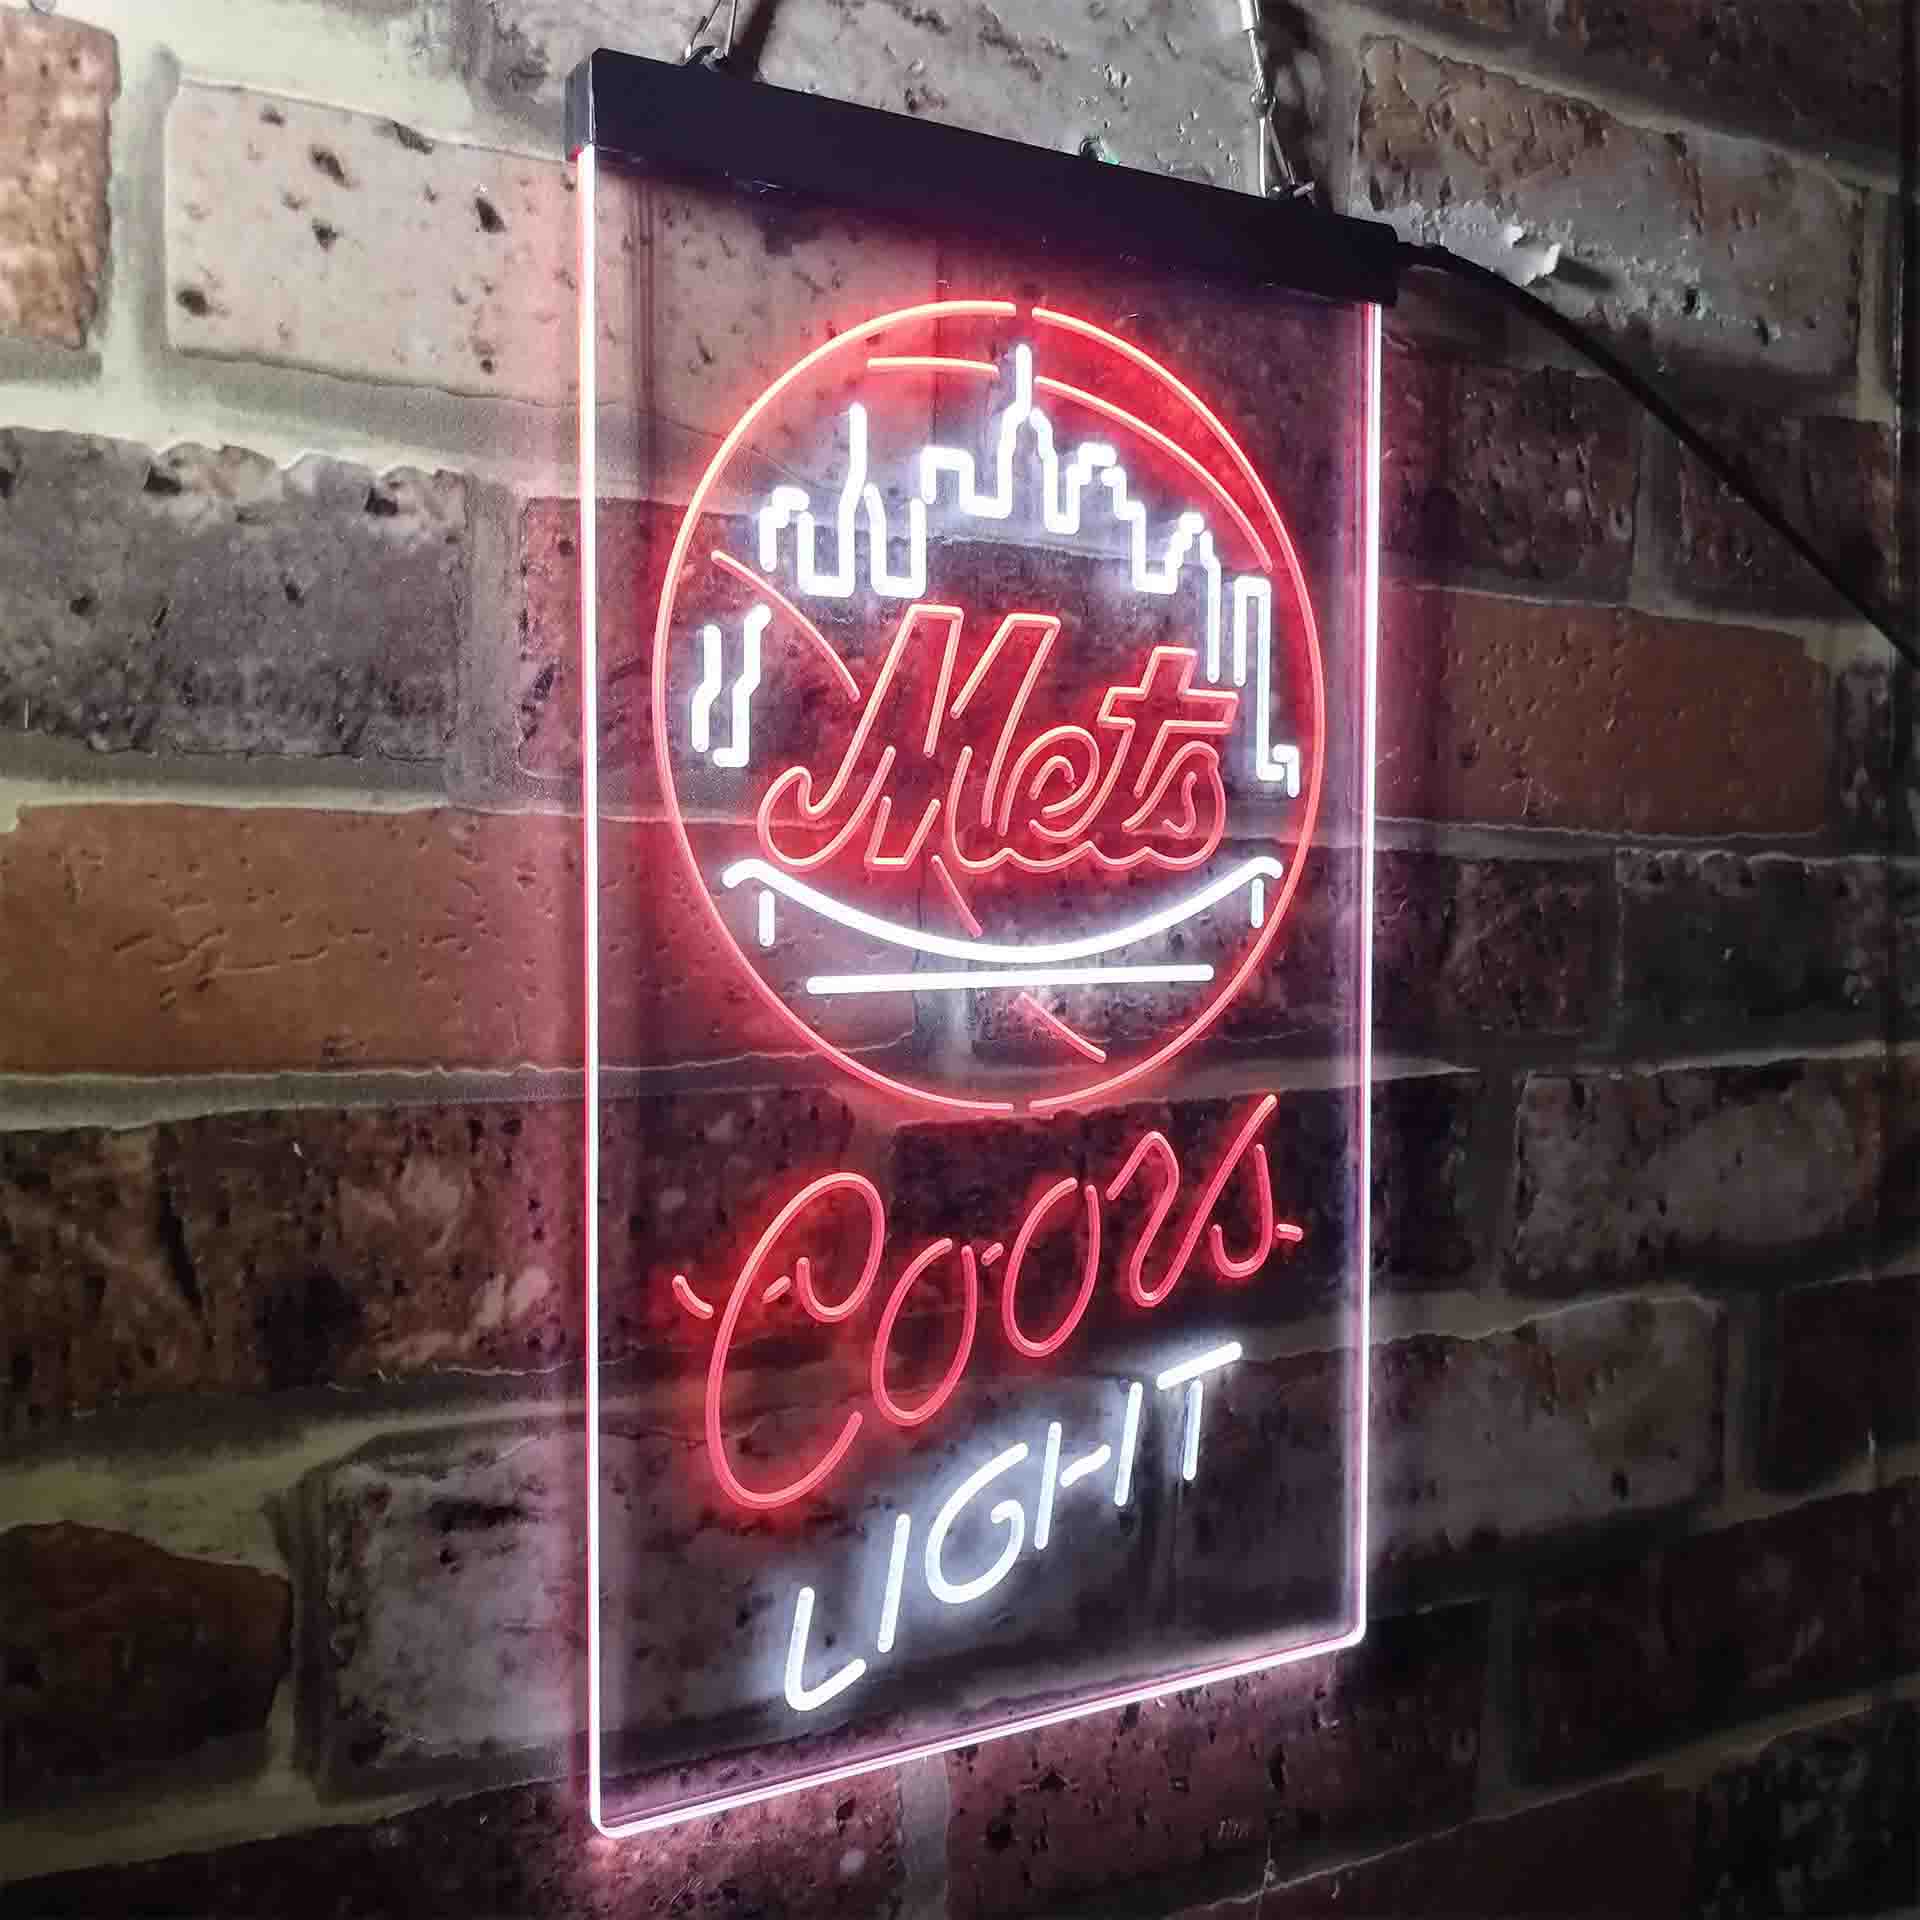 New York Mets Coors Light Neon-Like LED Sign